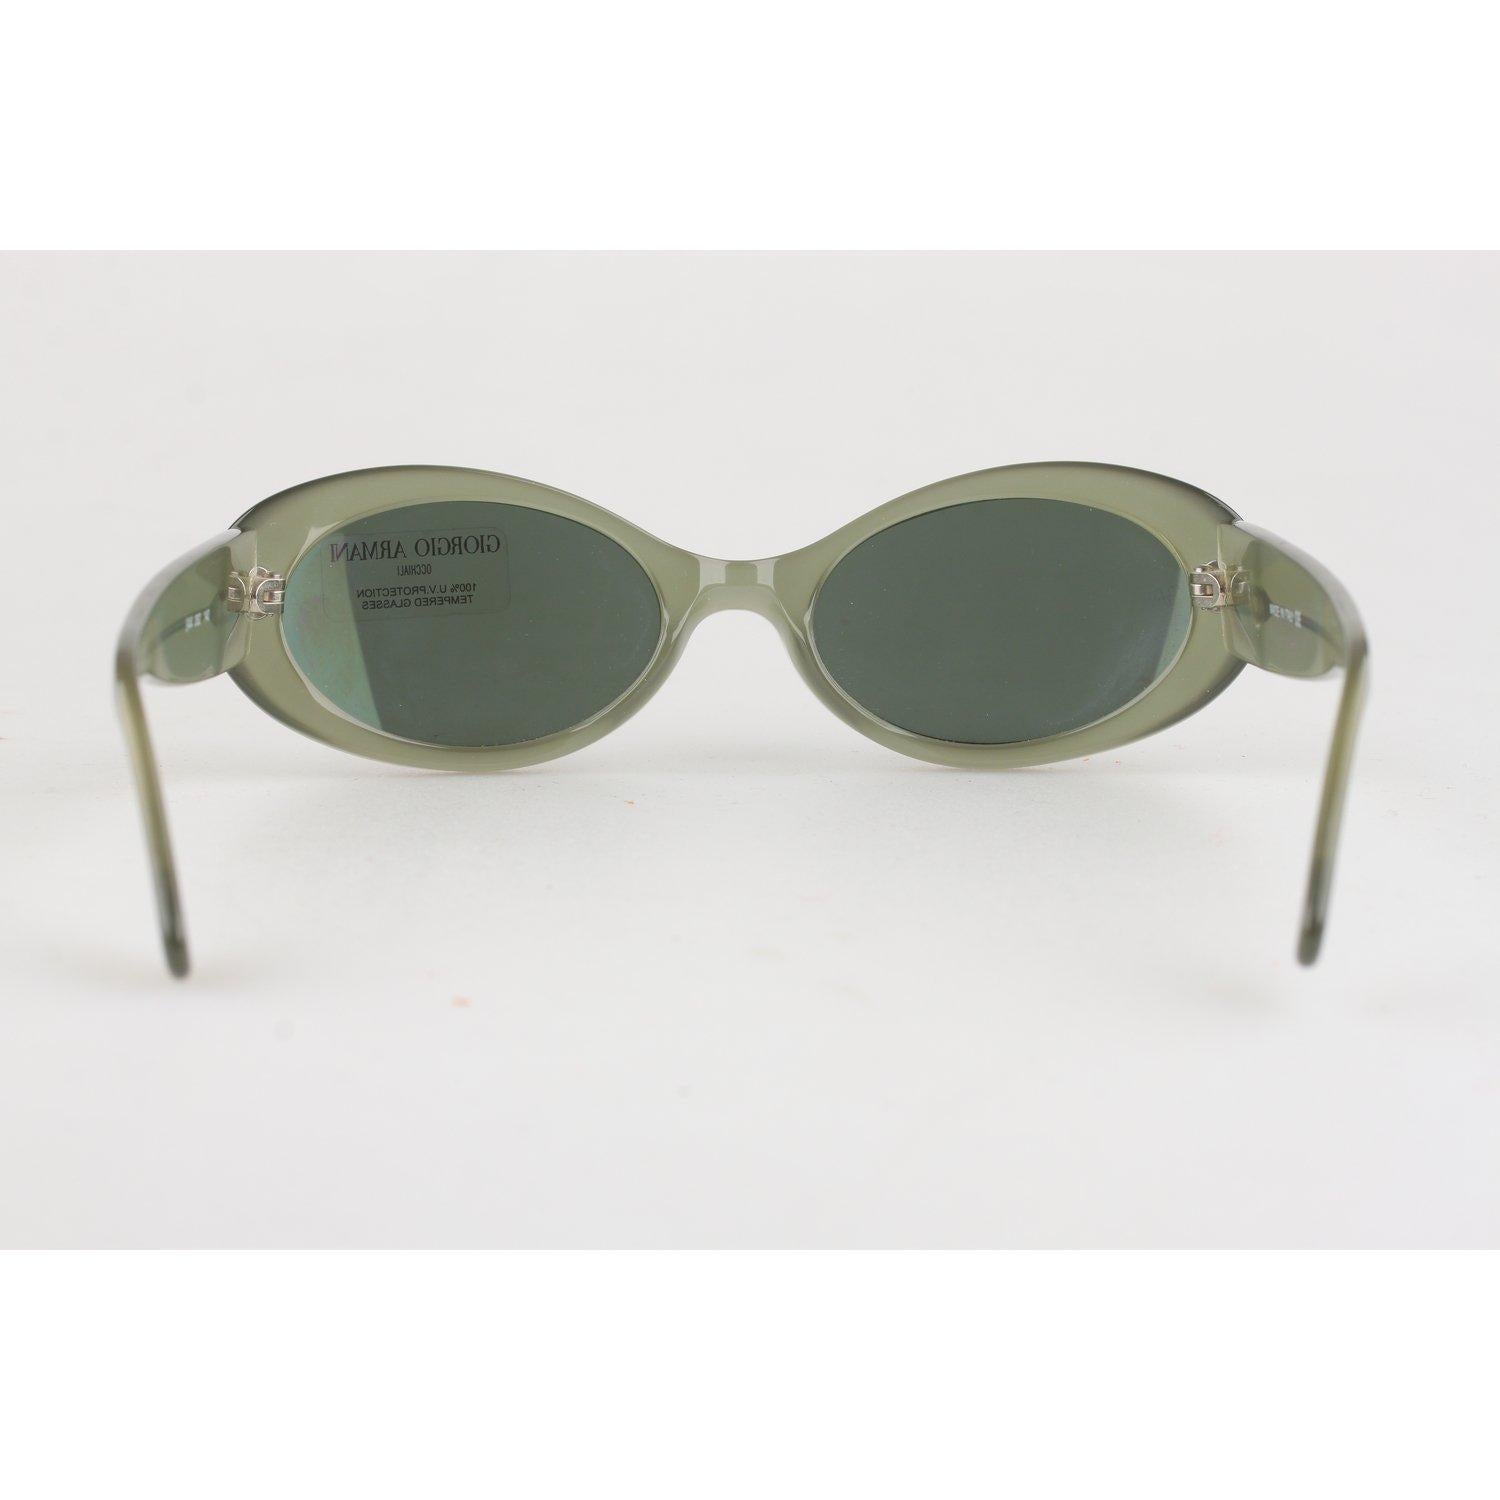 Giorgio Armani Vintage Gray Oval Sunglasses Mod 944 140 1